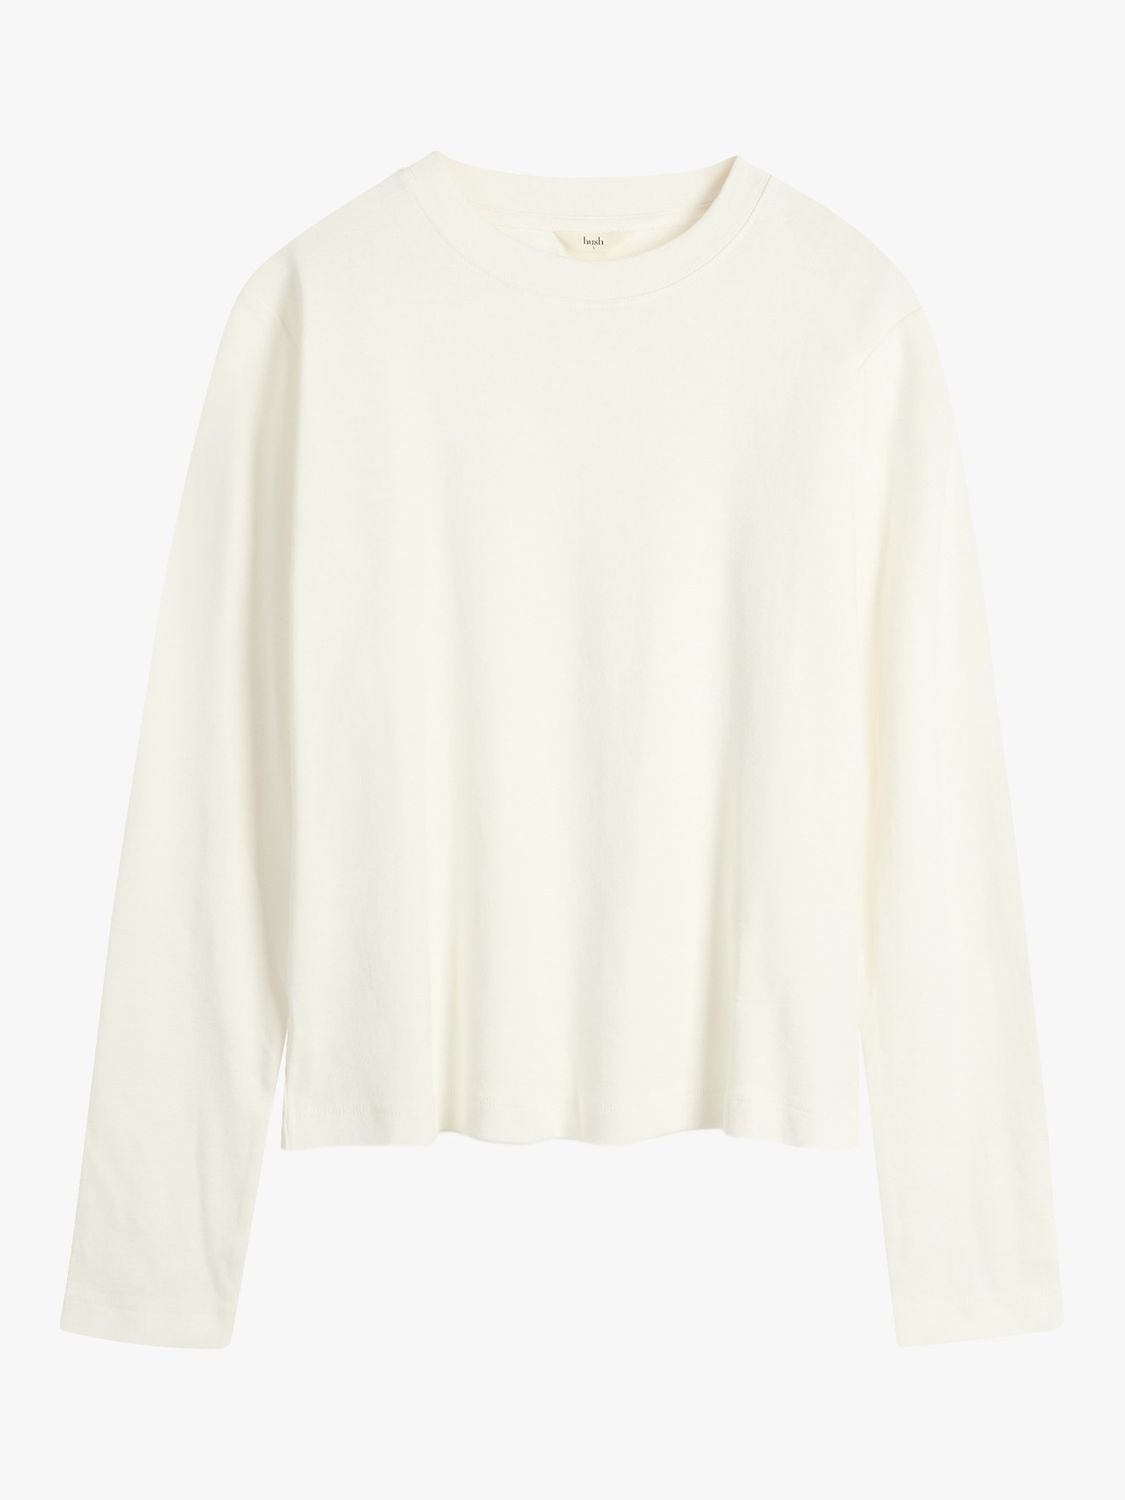 HUSH Cosima Cotton T-Shirt, Soft White at John Lewis & Partners